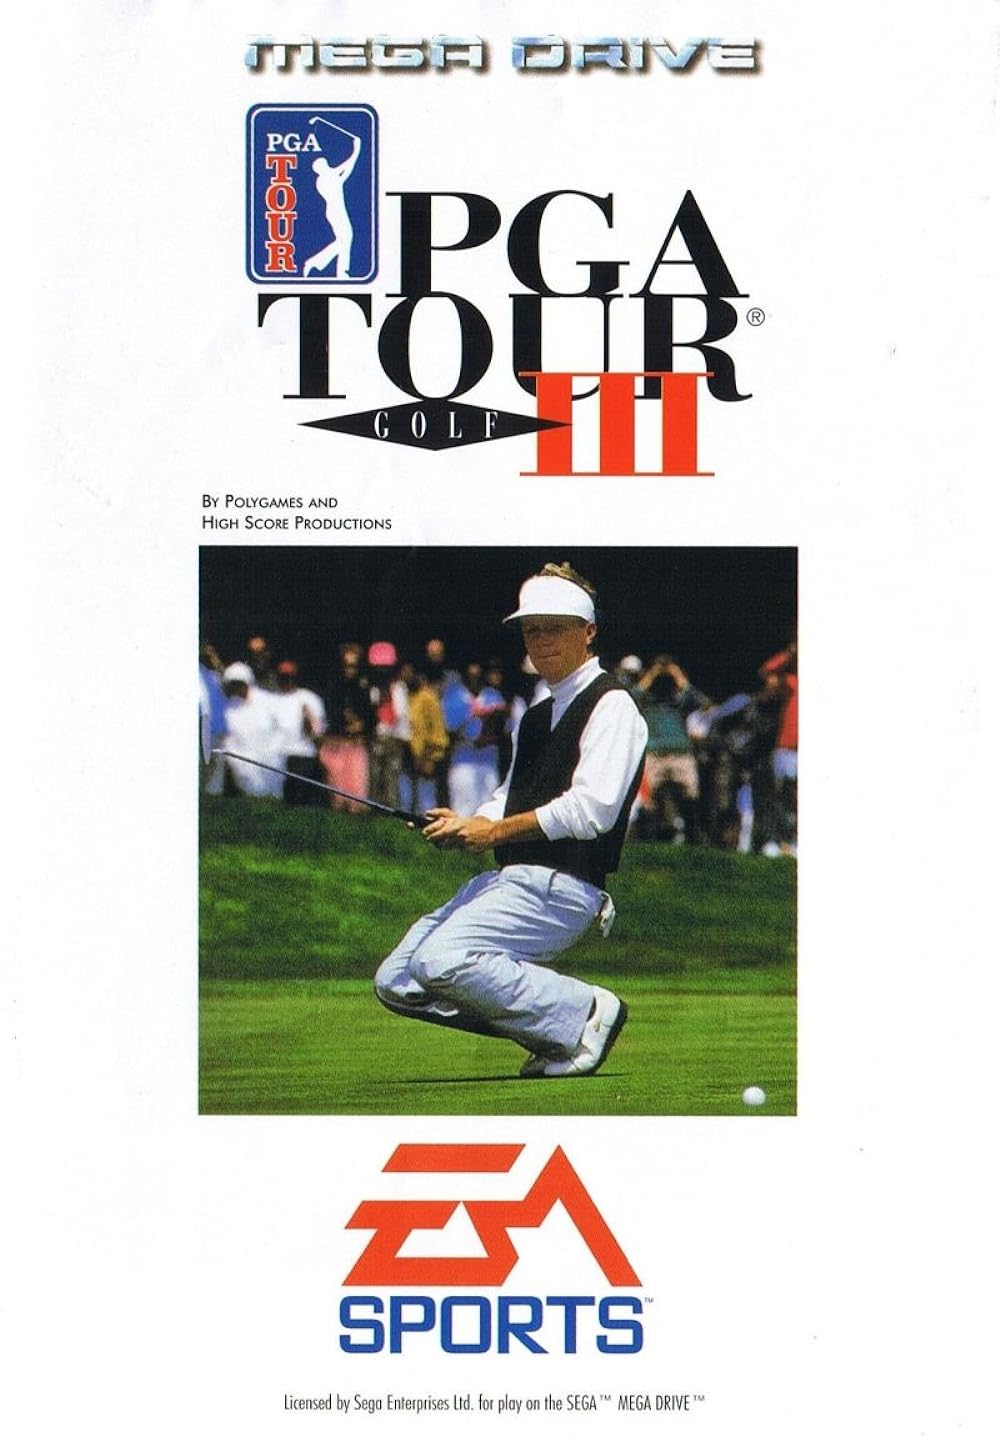 jaquette du jeu vidéo PGA Tour Golf III